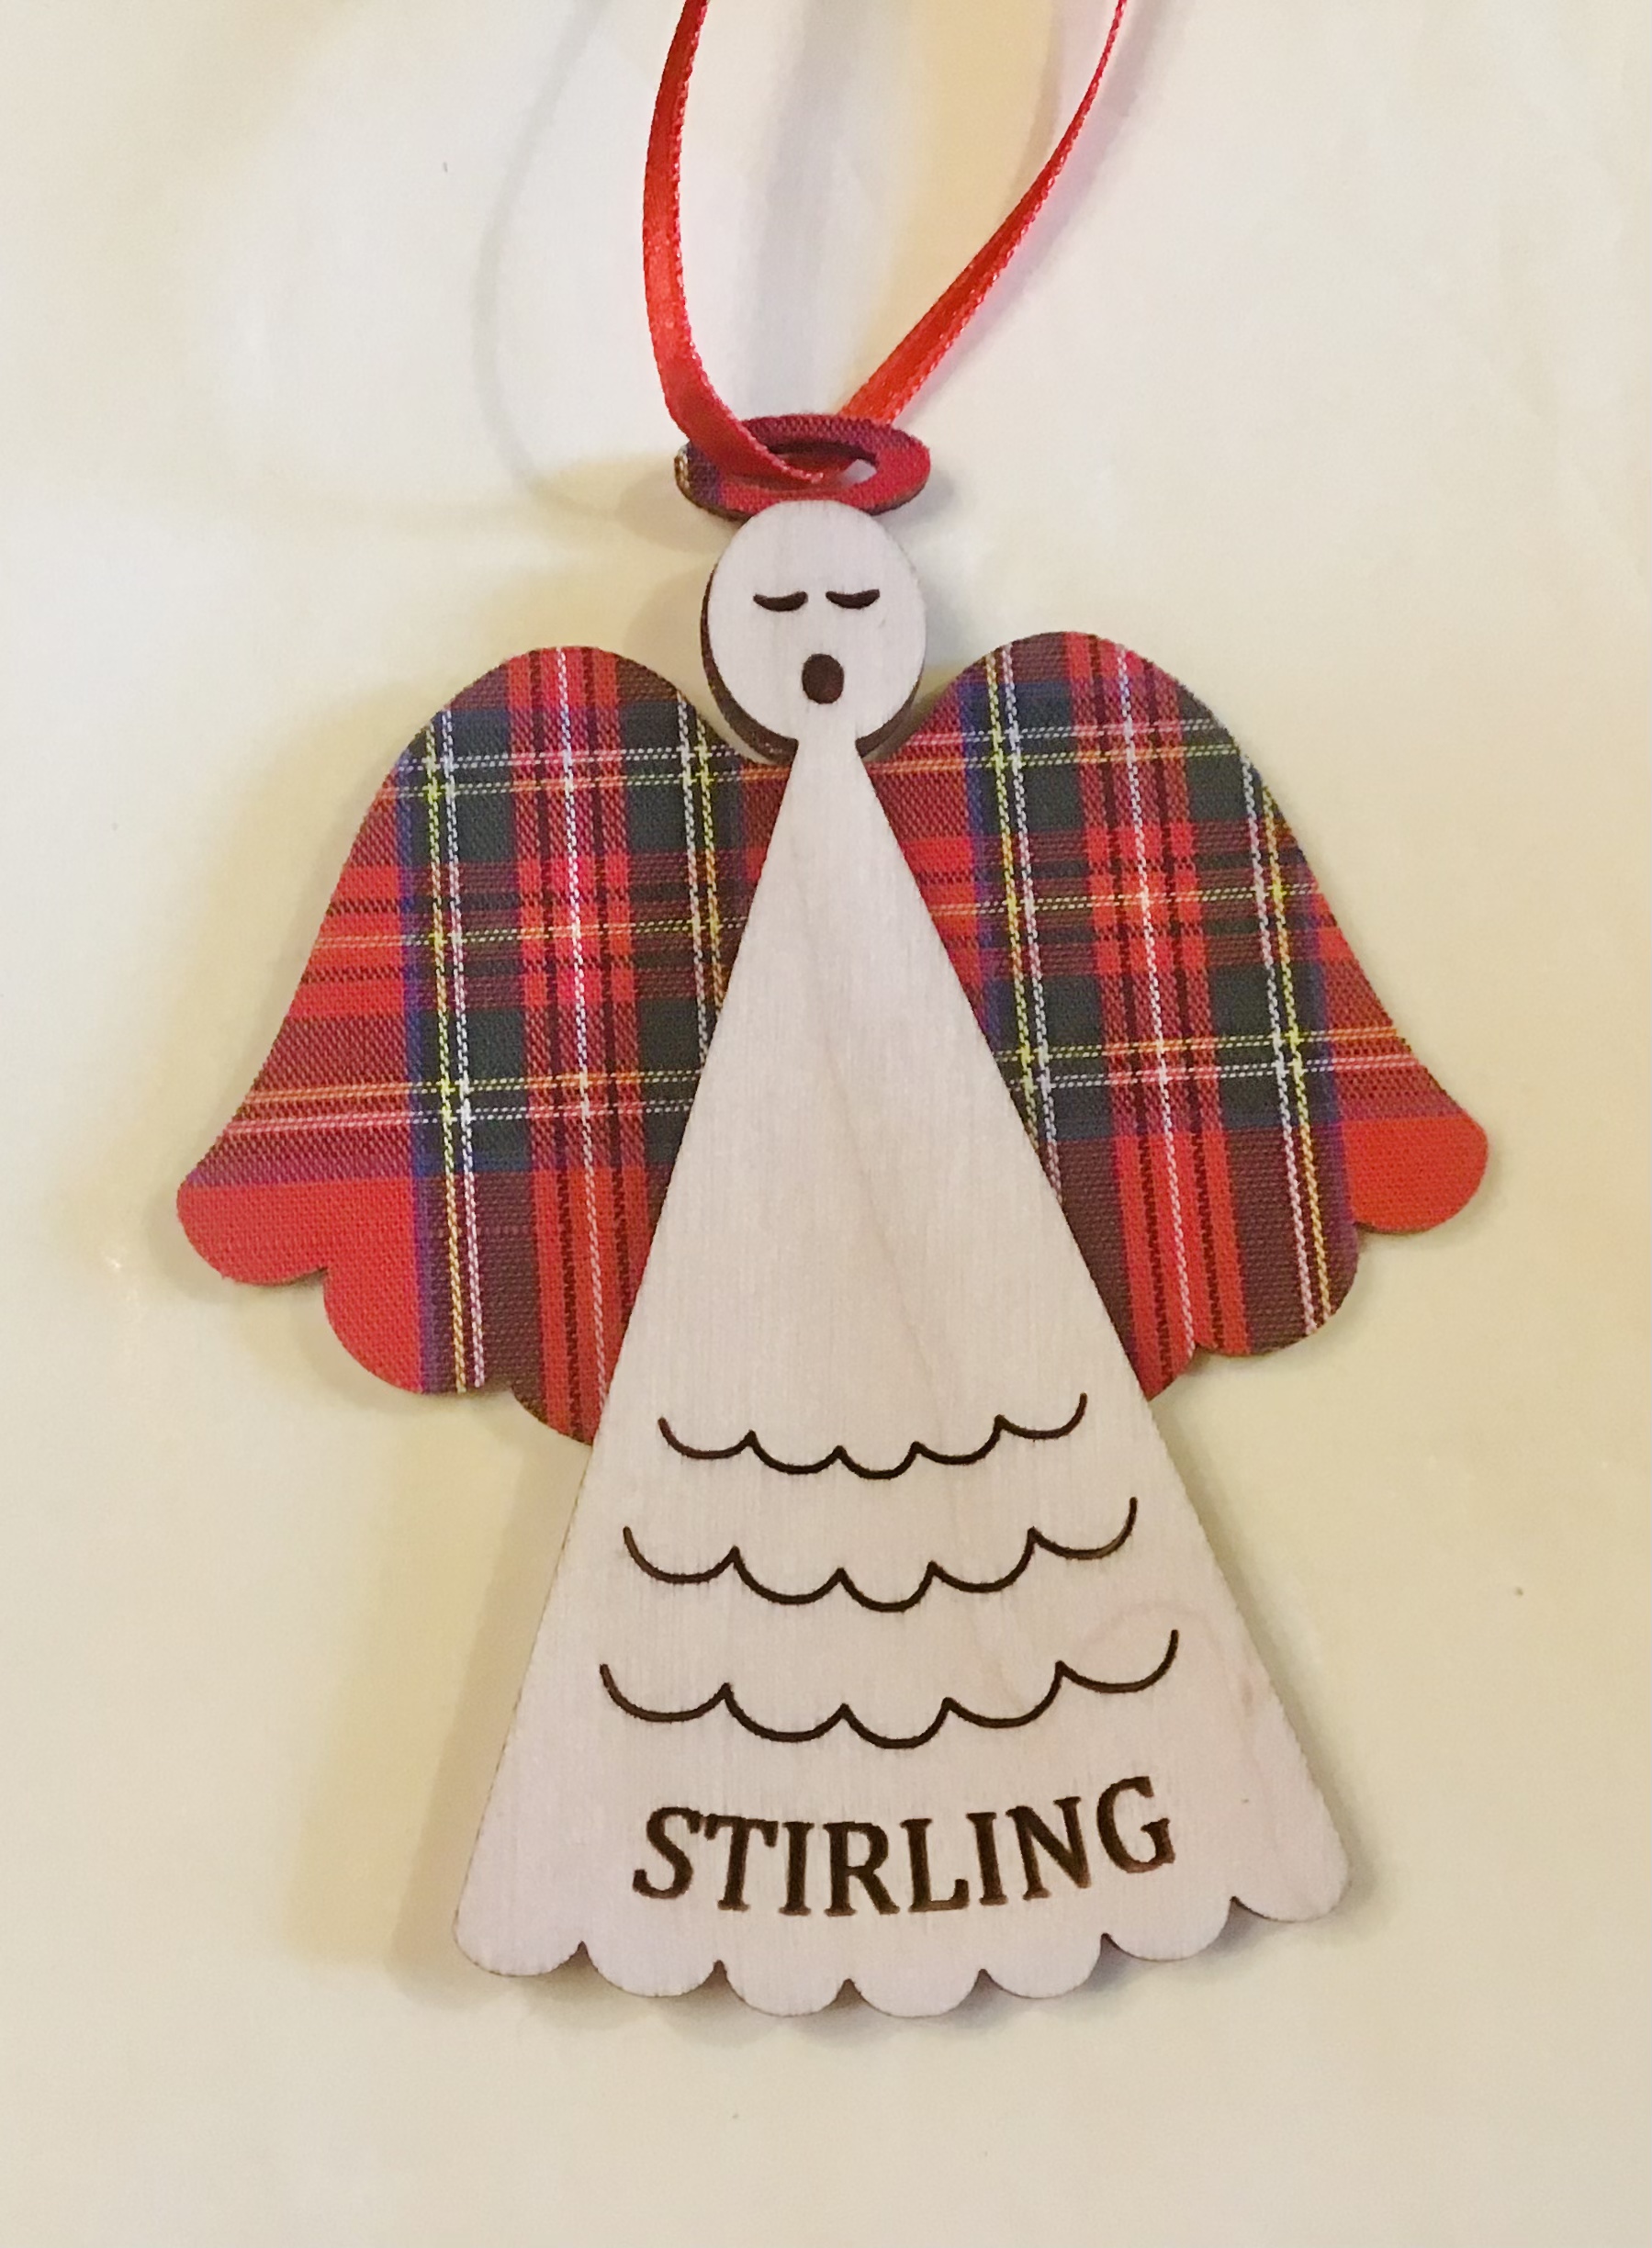 Stirling Angel